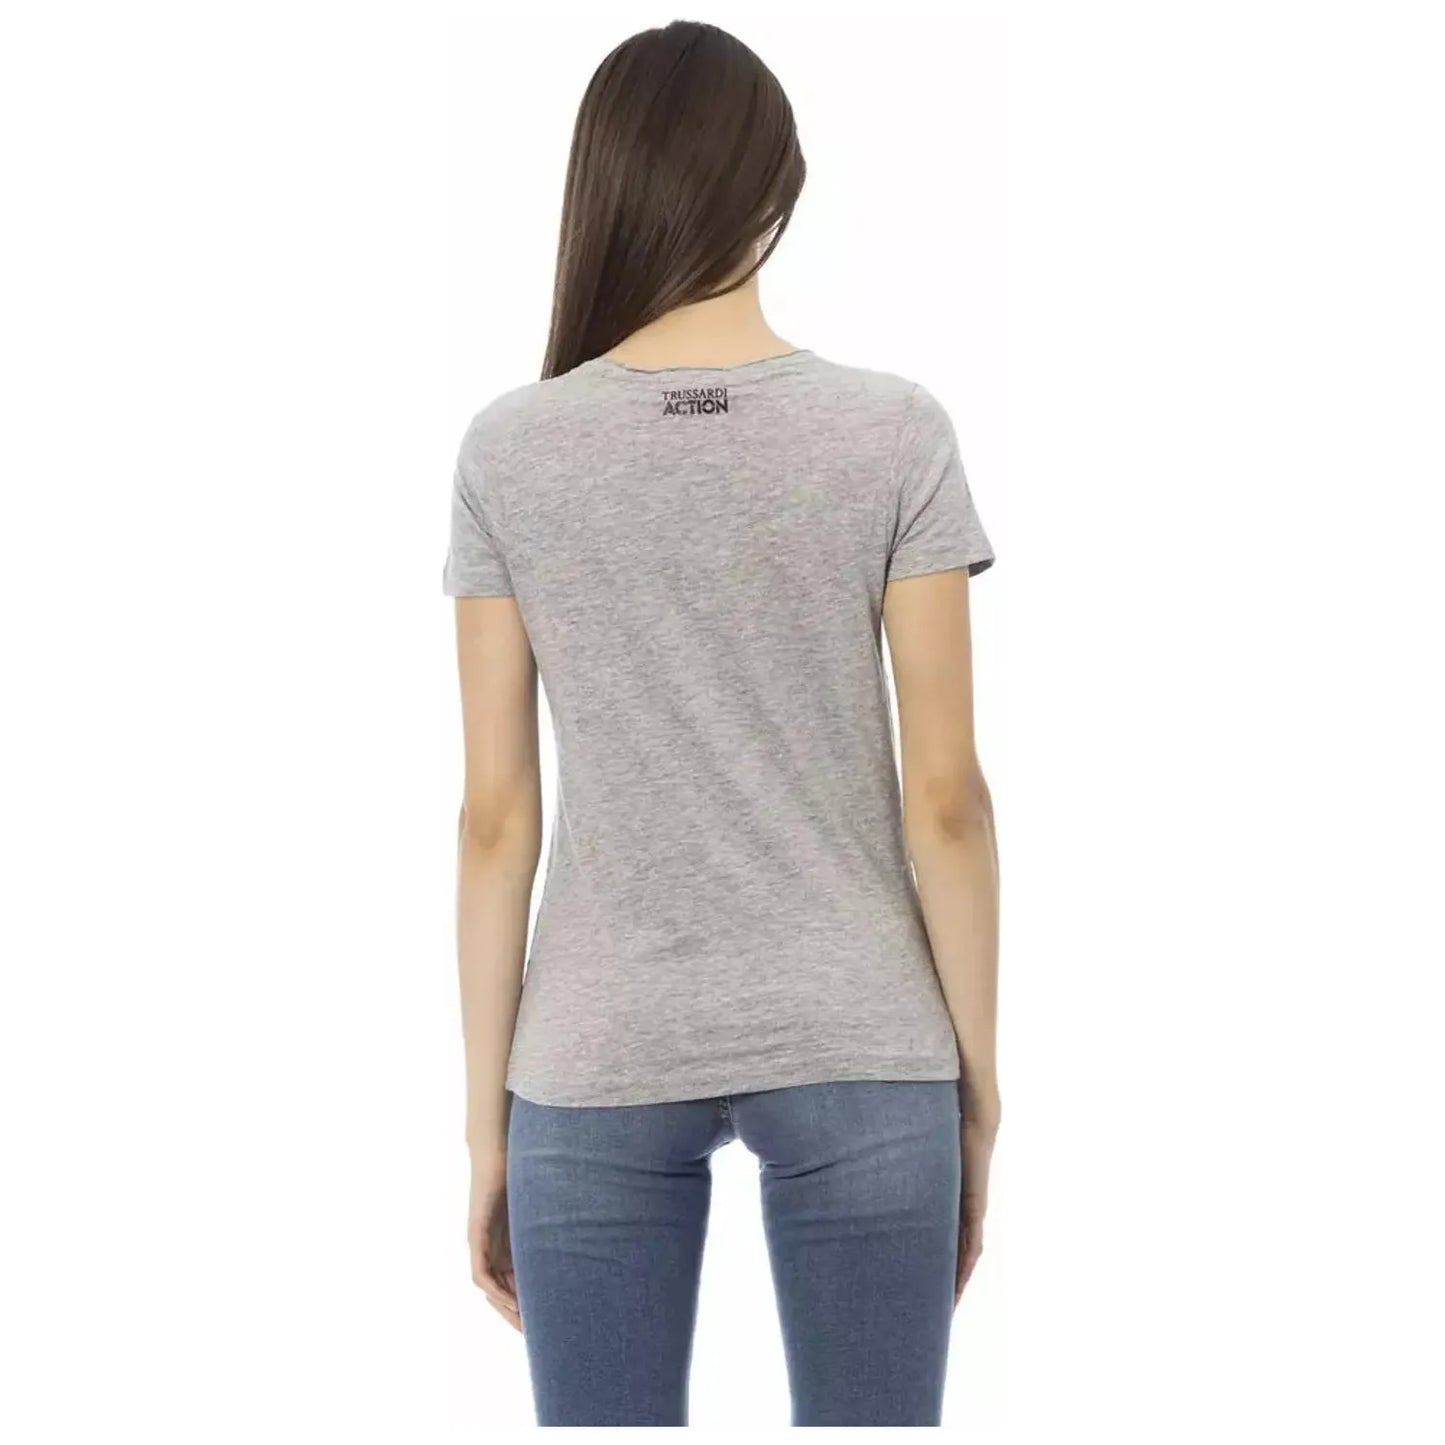 Trussardi Action Chic Gray Cotton Blend Round Neck Tee gray-cotton-tops-t-shirt-12